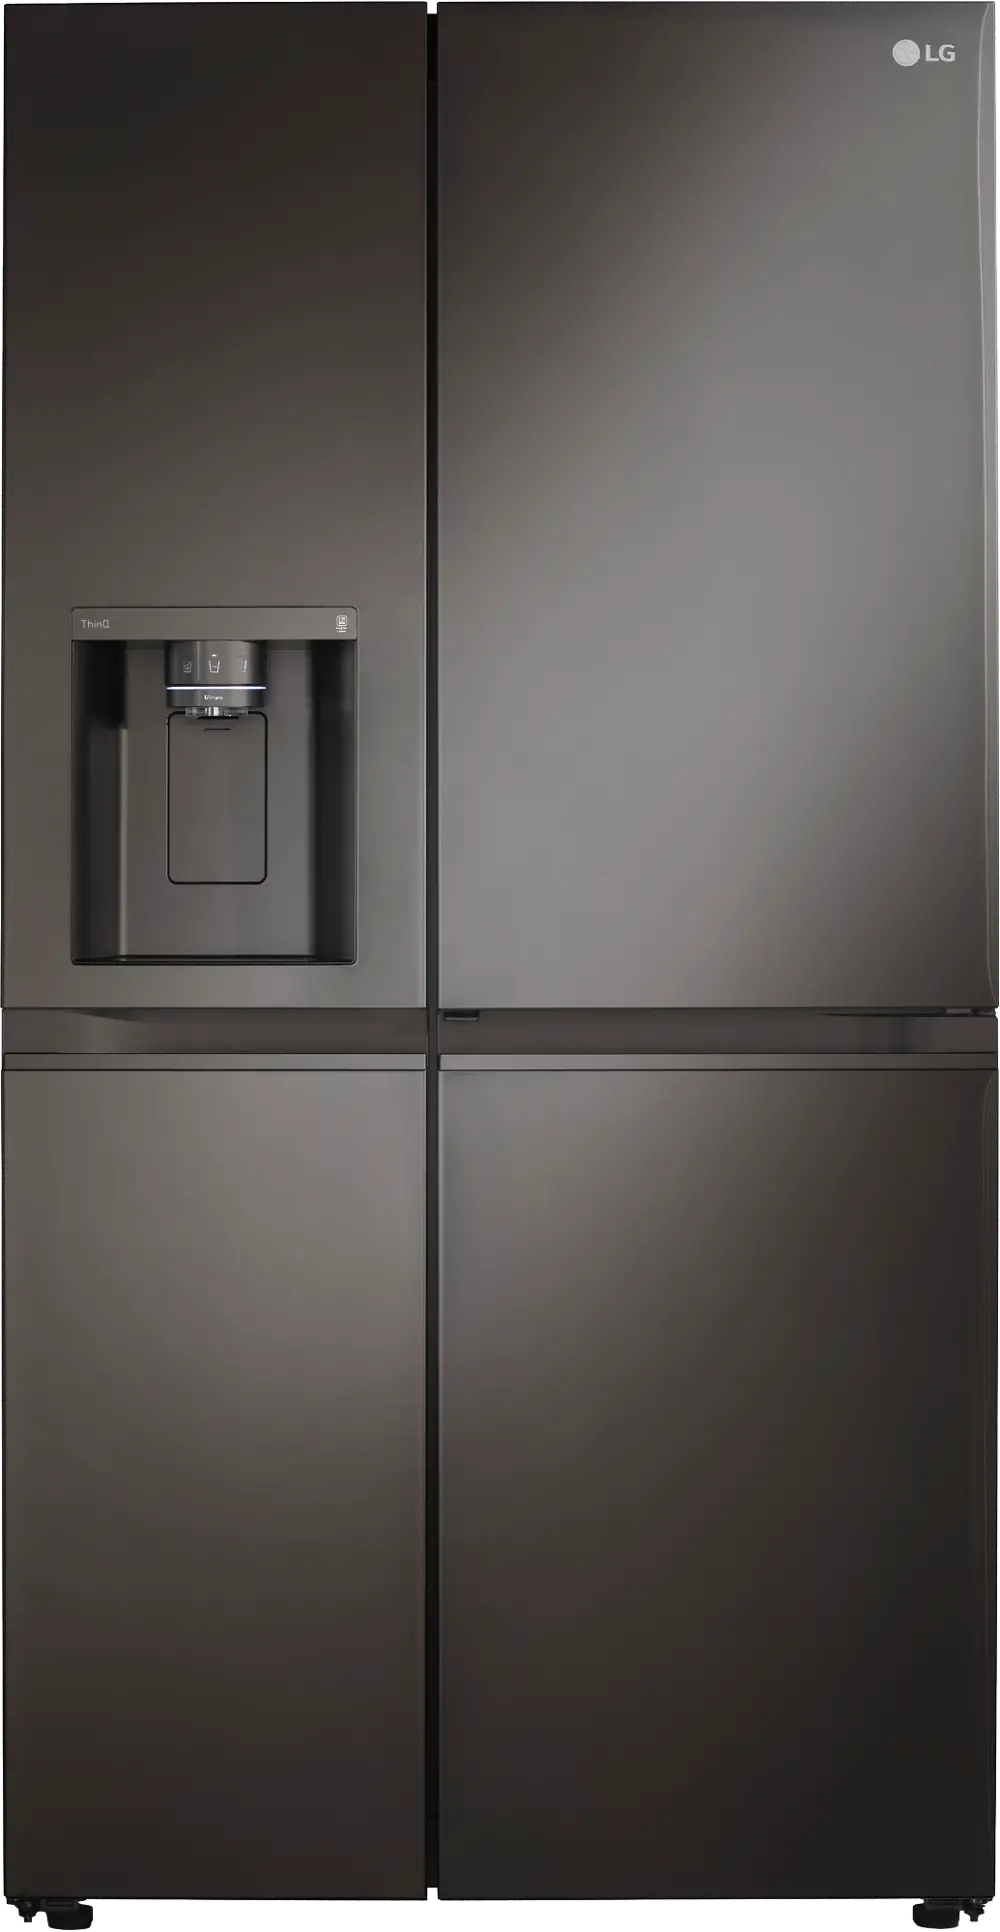 LRSDS2706D LG 26.8 cu ft Side by Side Refrigerator - Black Stainless Steel-1